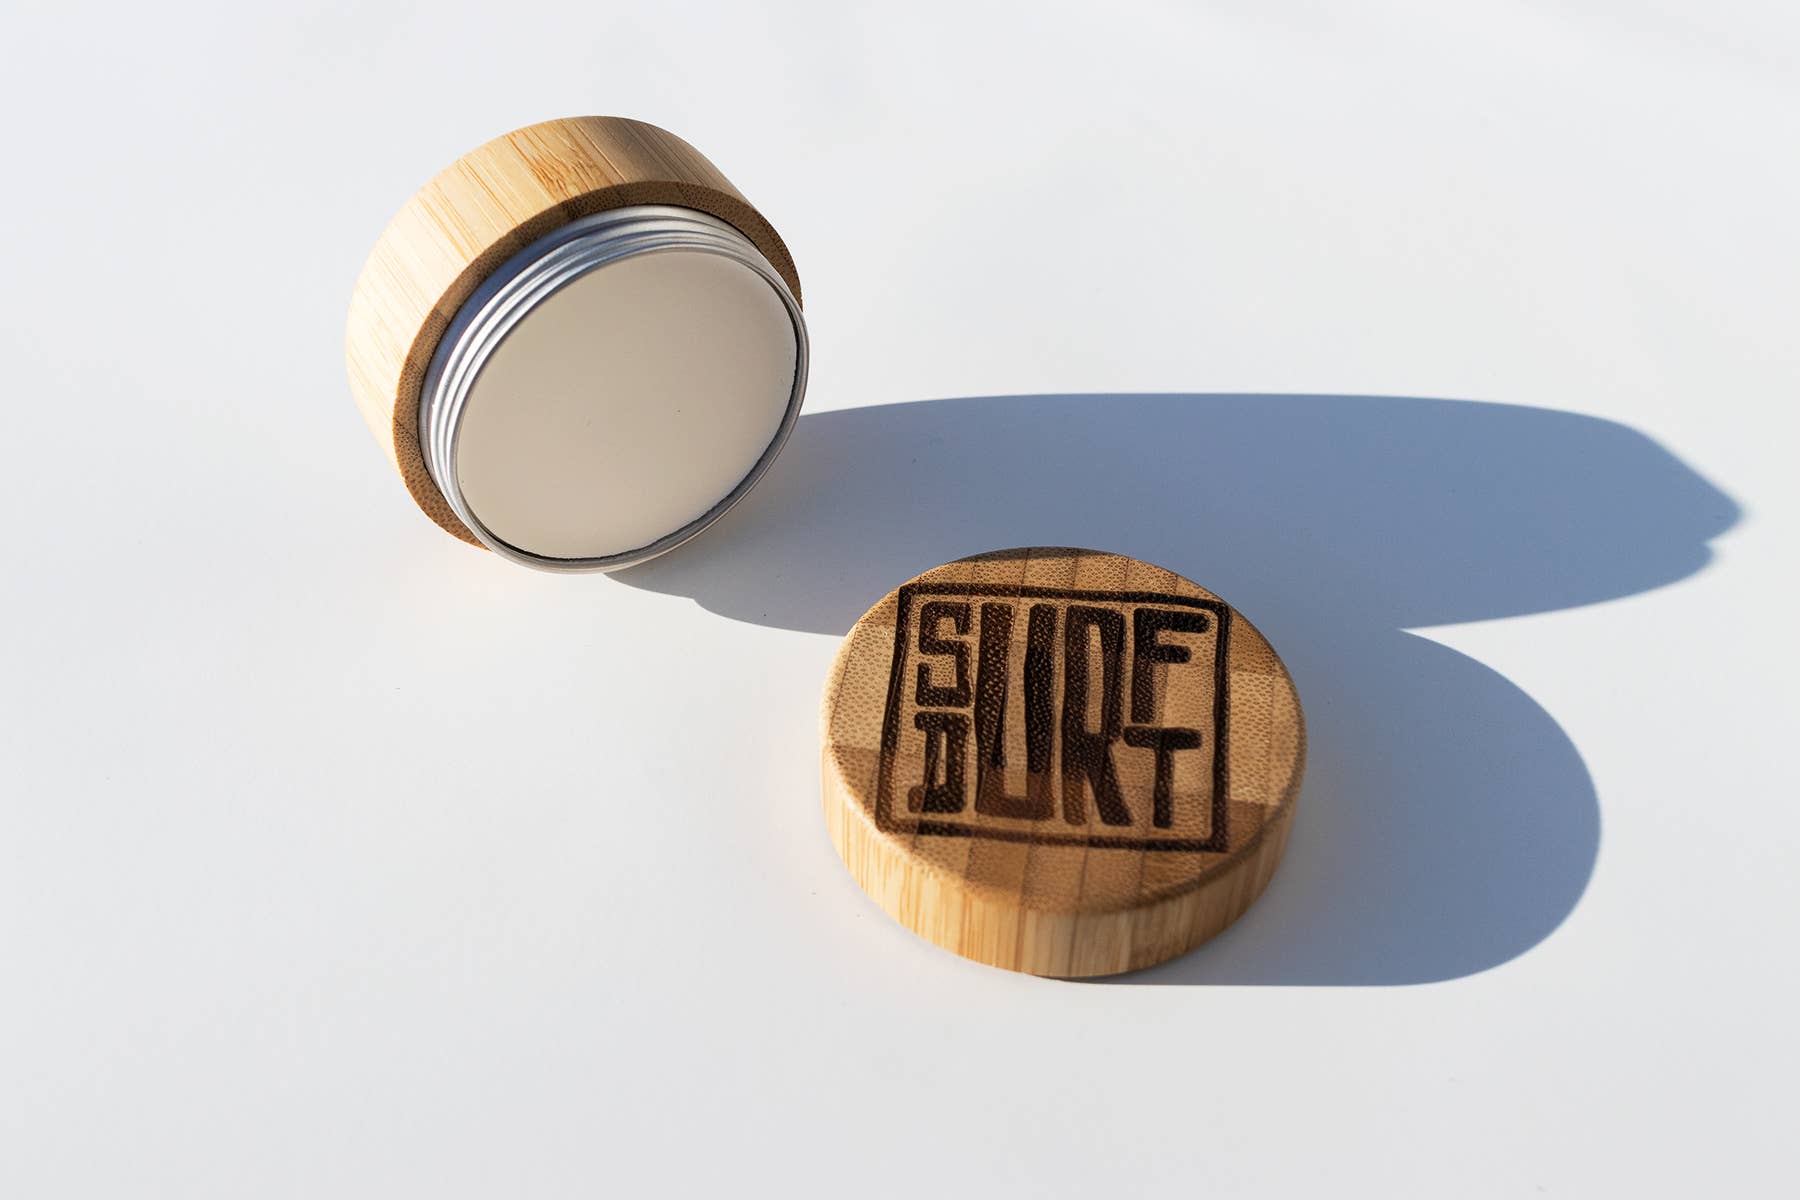 SurfDurt - Surf Durt Sunscreen